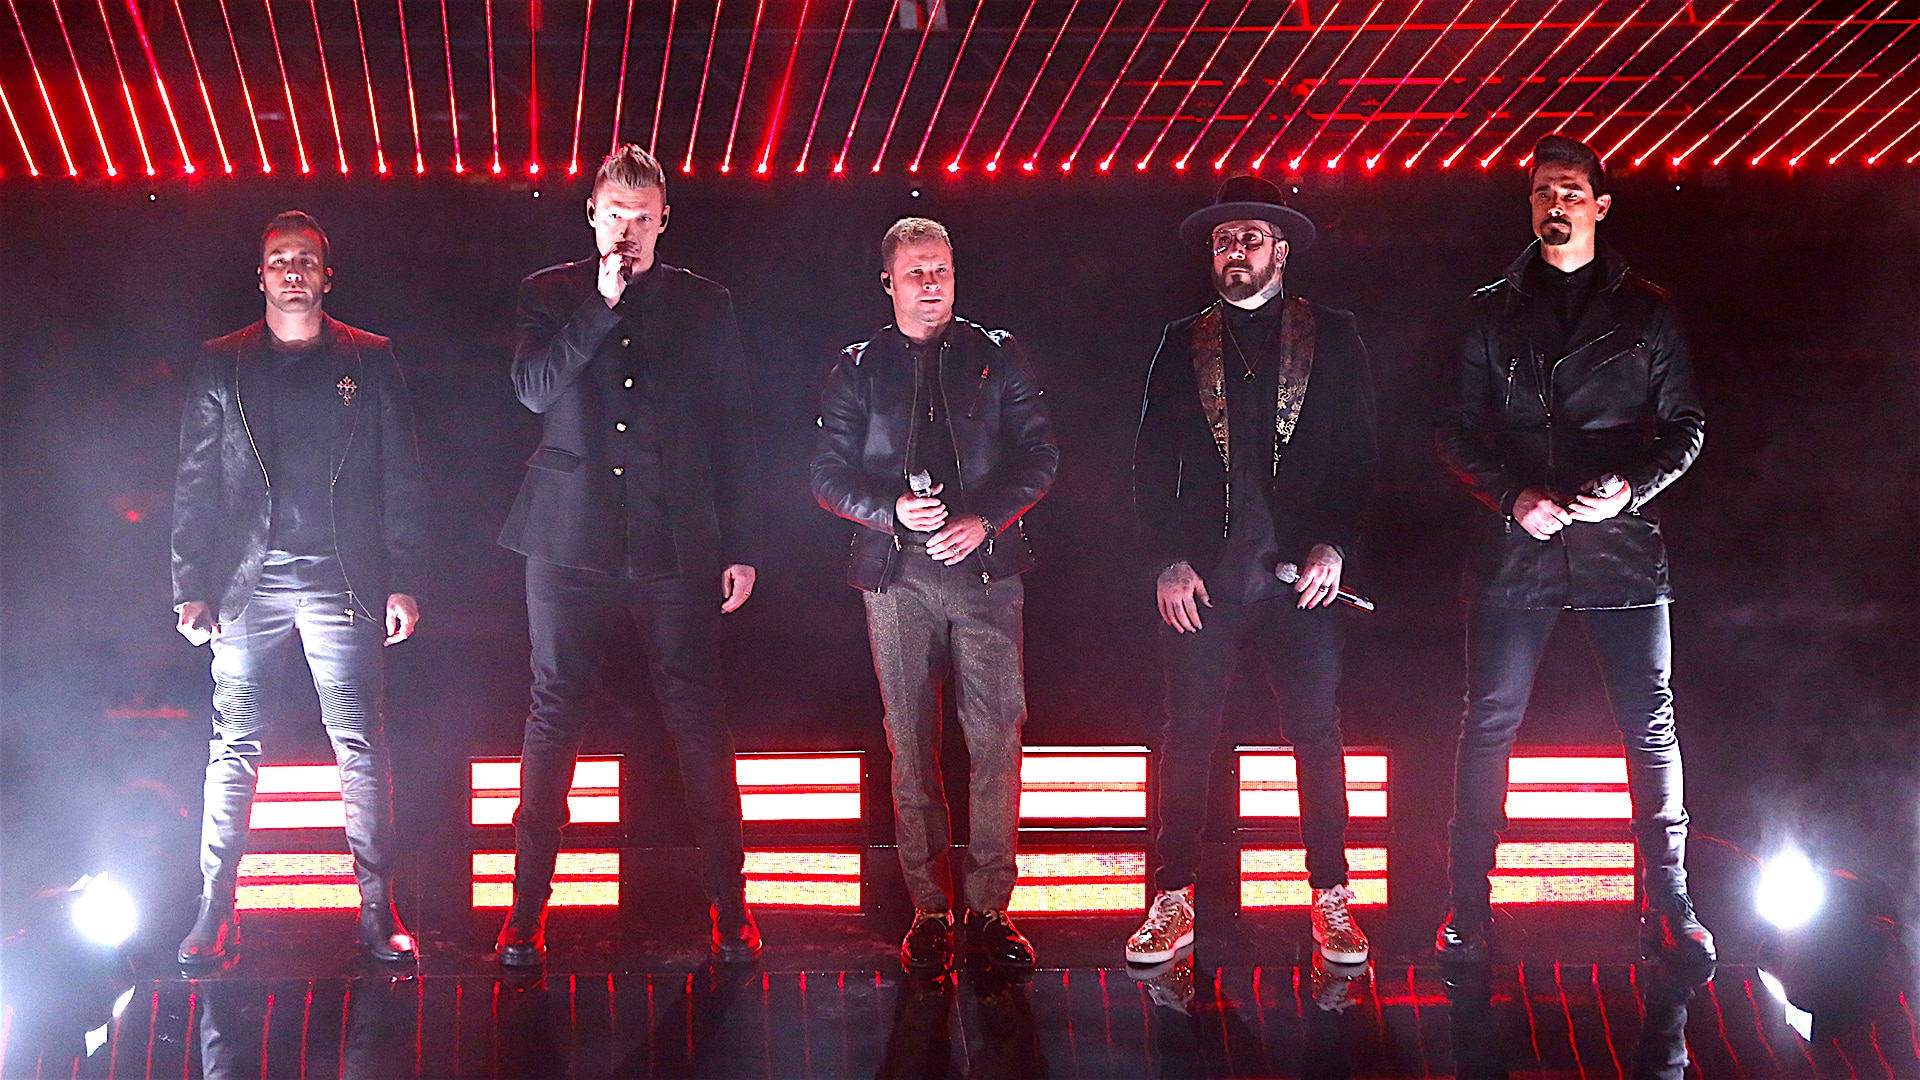 Watch The Voice Highlight: Backstreet Boys: "Chances" - NBC.com